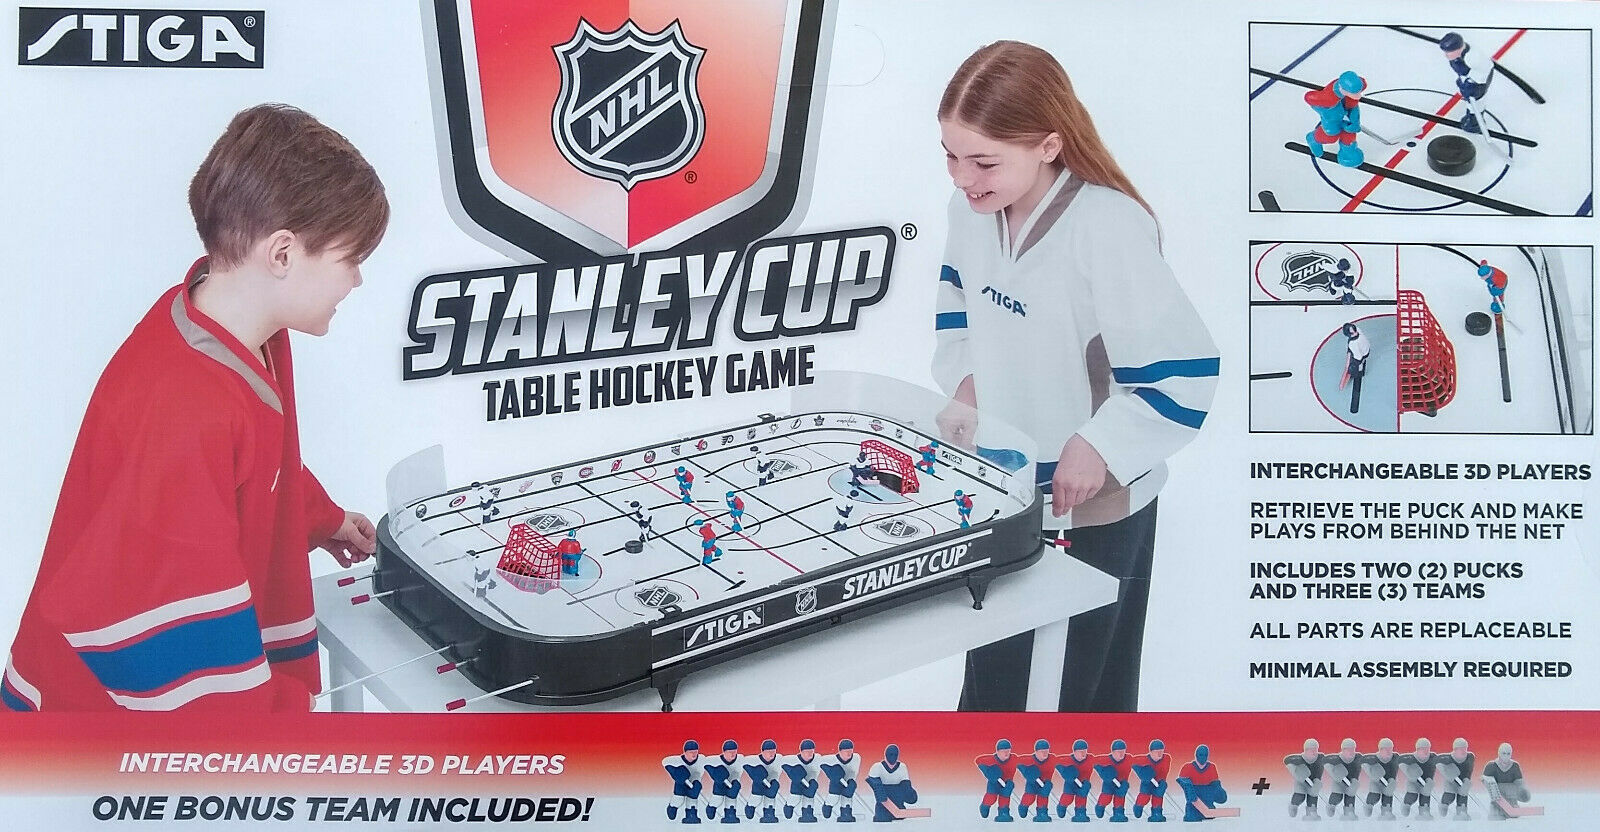 https://snowsledsonline.com/wp-content/uploads/2015/08/Stanley-Cup-New-Stiga.jpg